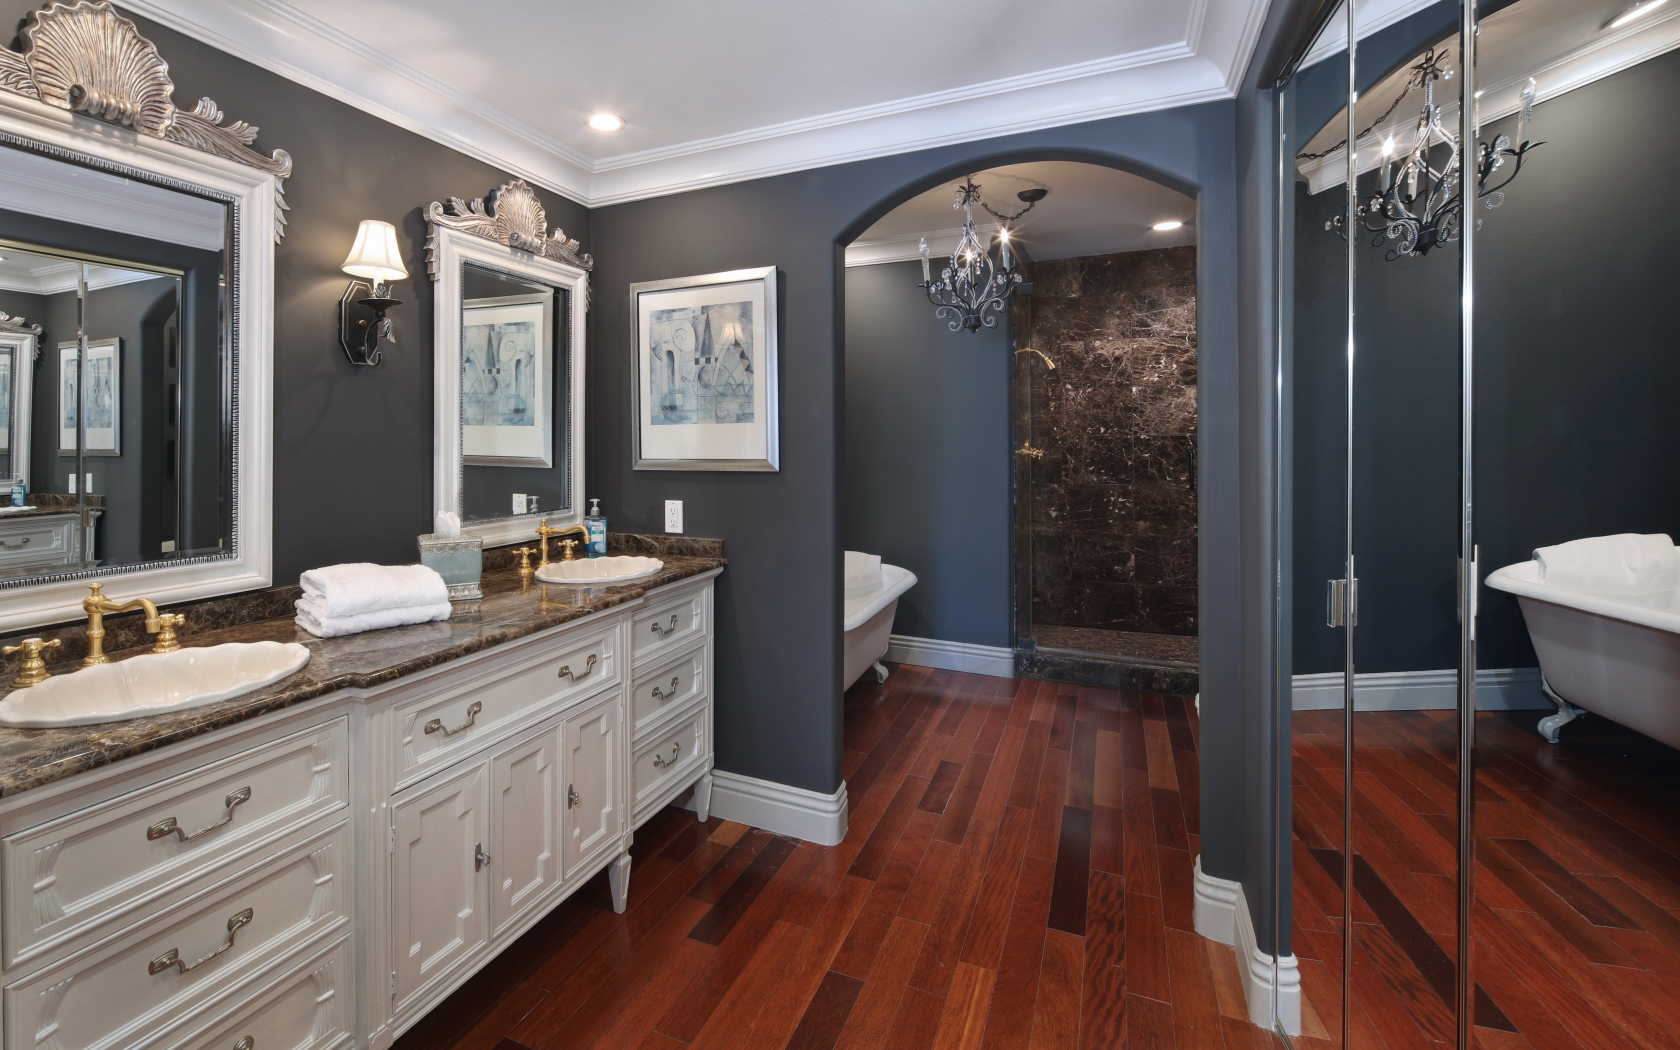 Beautiful bathroom in gray - pastel colors